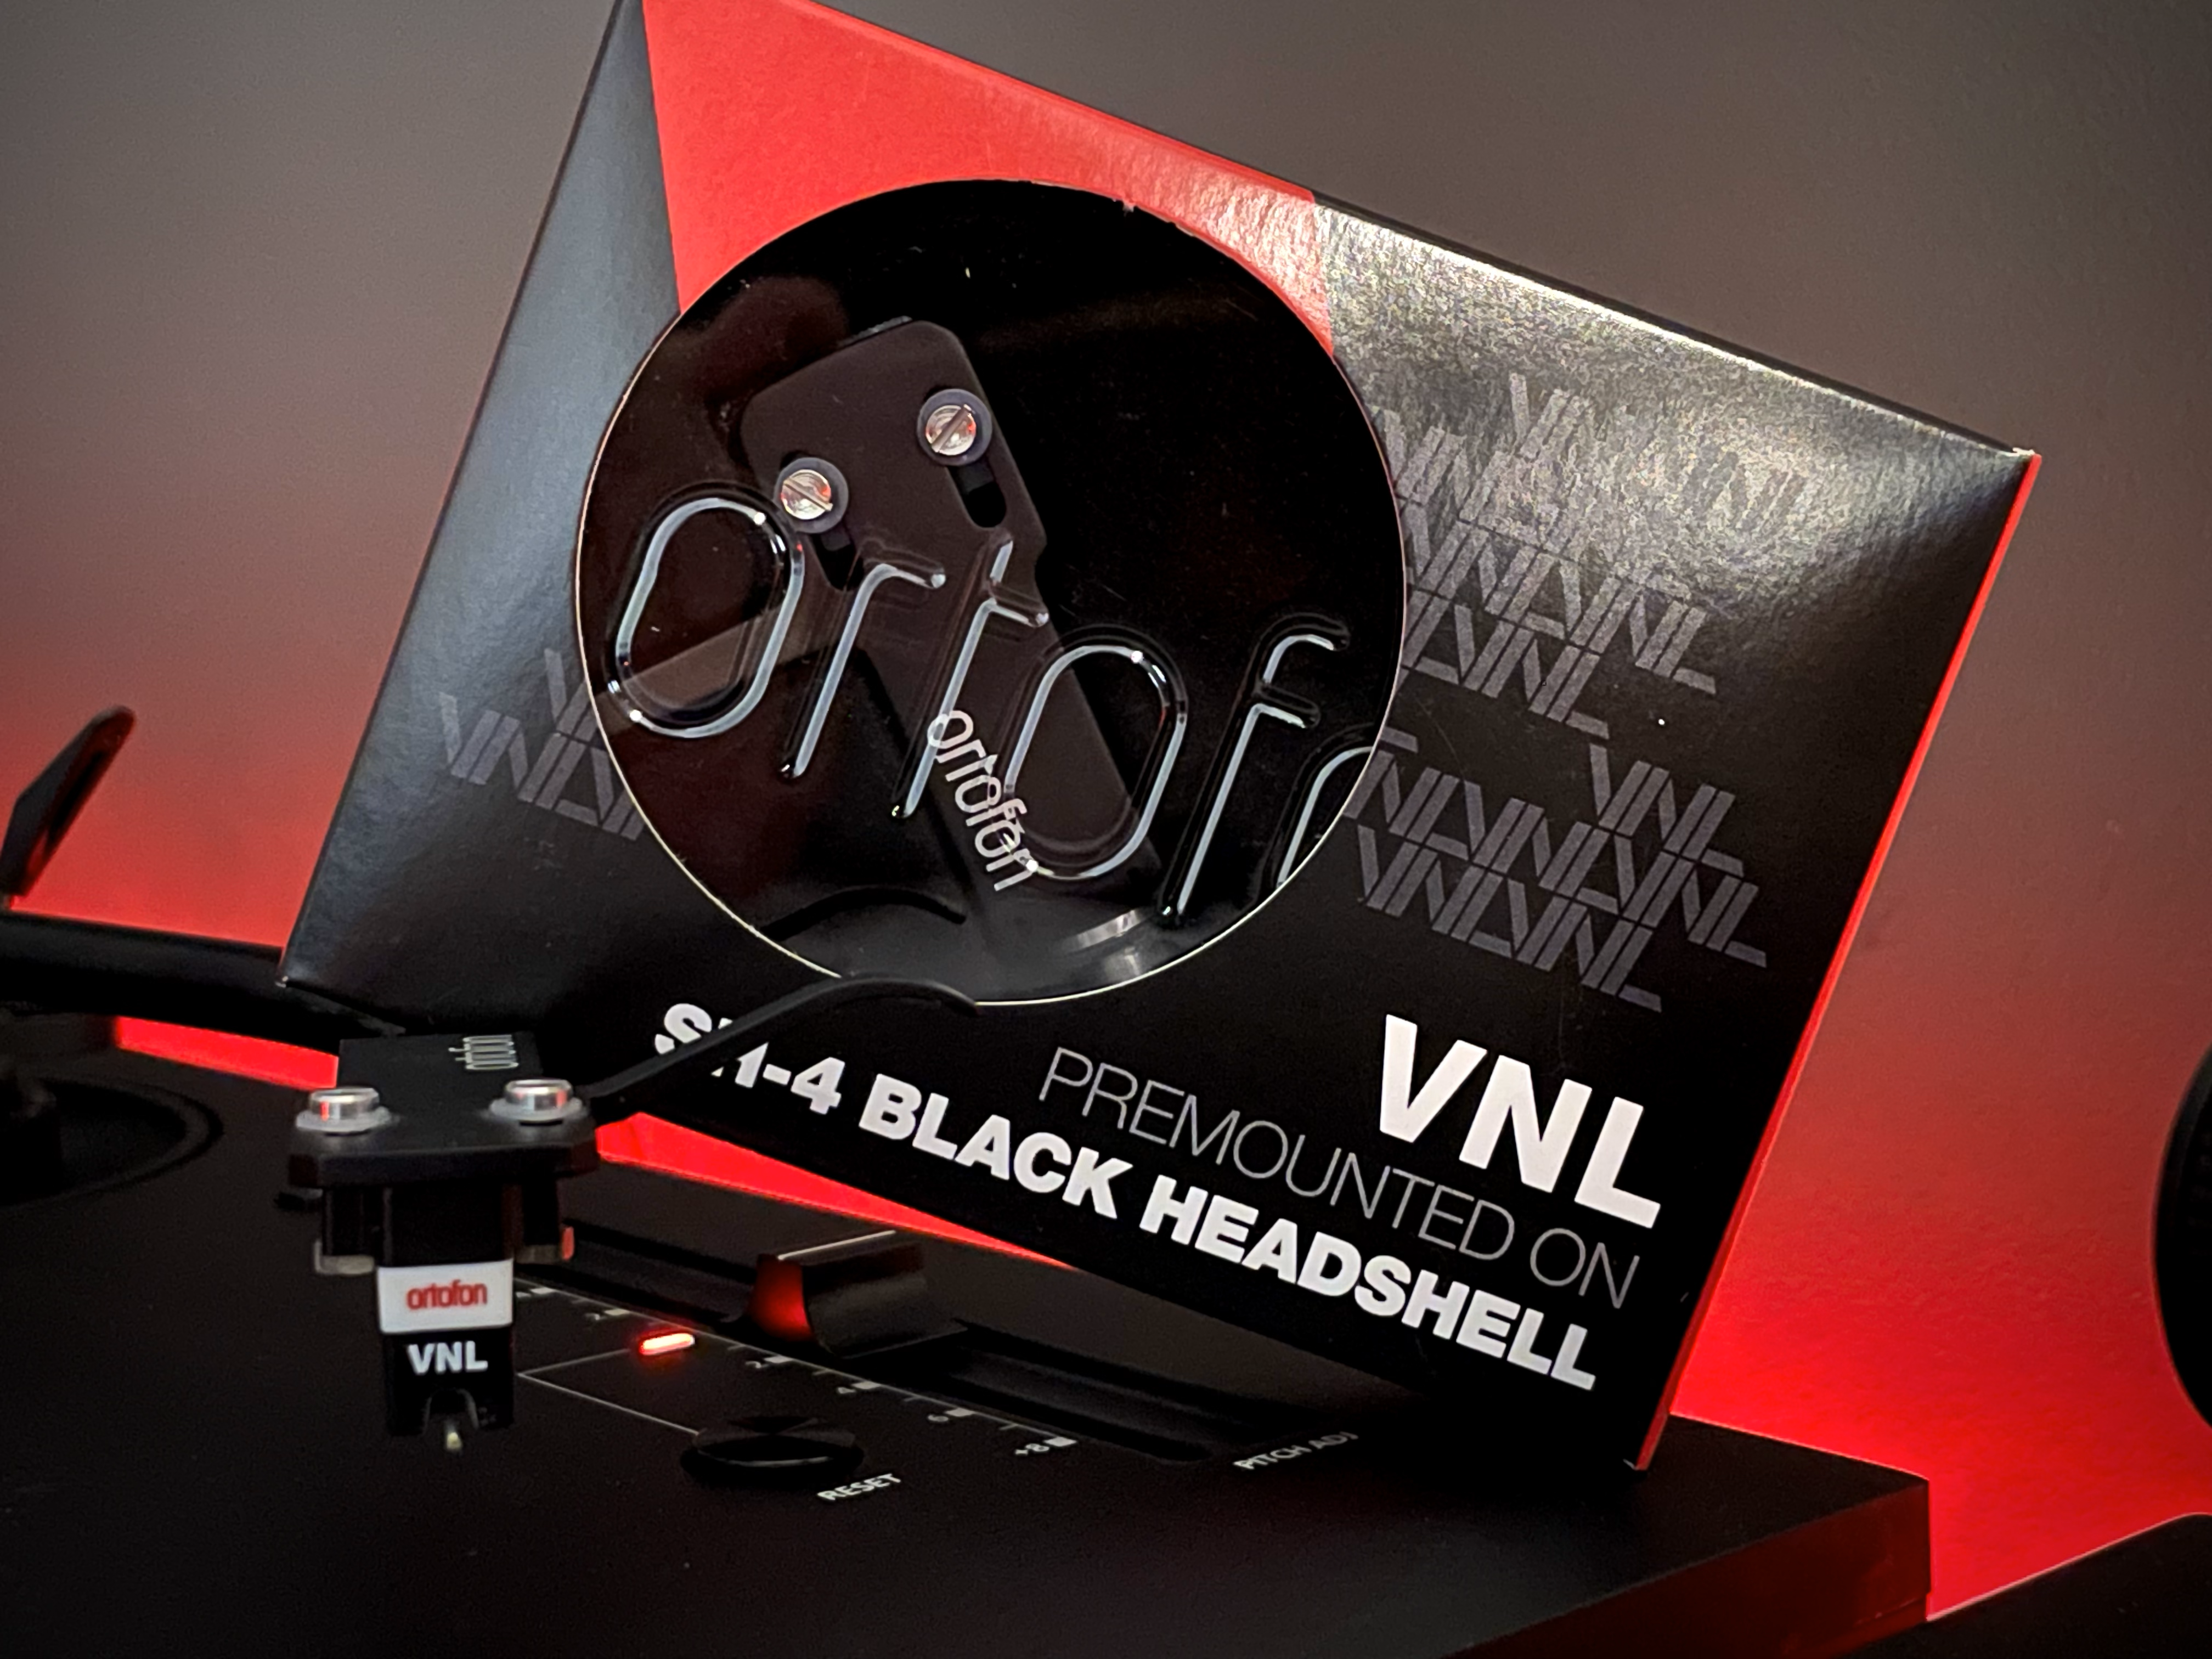 VNL Pre-mounted Black SH4 Headshell with VNL II Stylus.